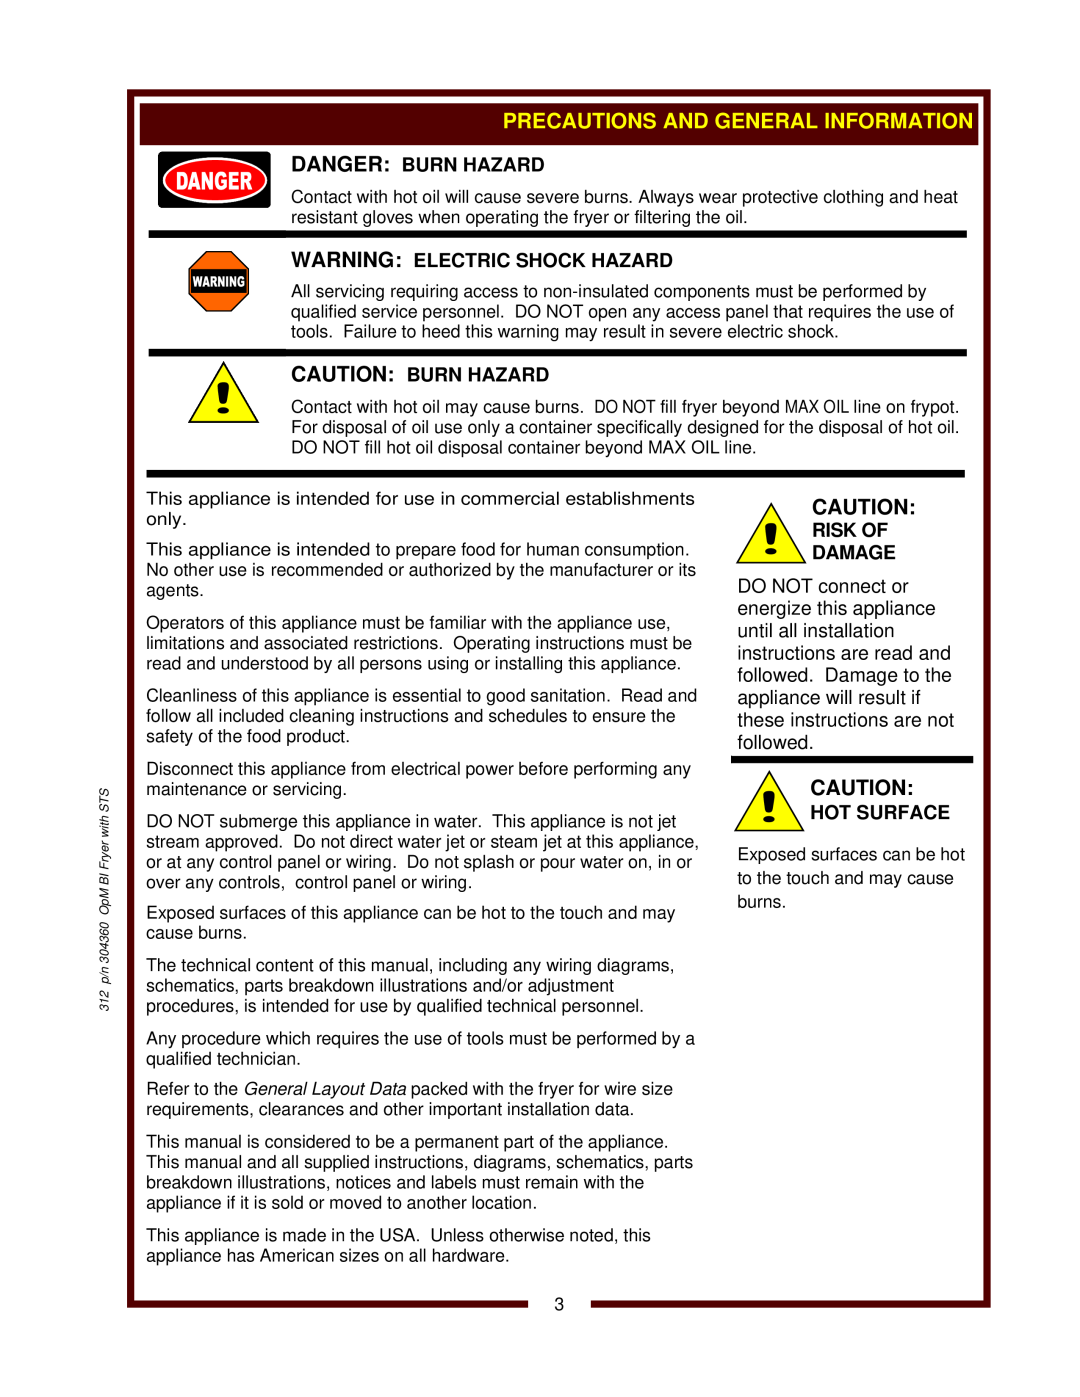 Wells F-1016 Precautions And General Information, Danger Burn Hazard, Warning Electric Shock Hazard, Caution Burn Hazard 